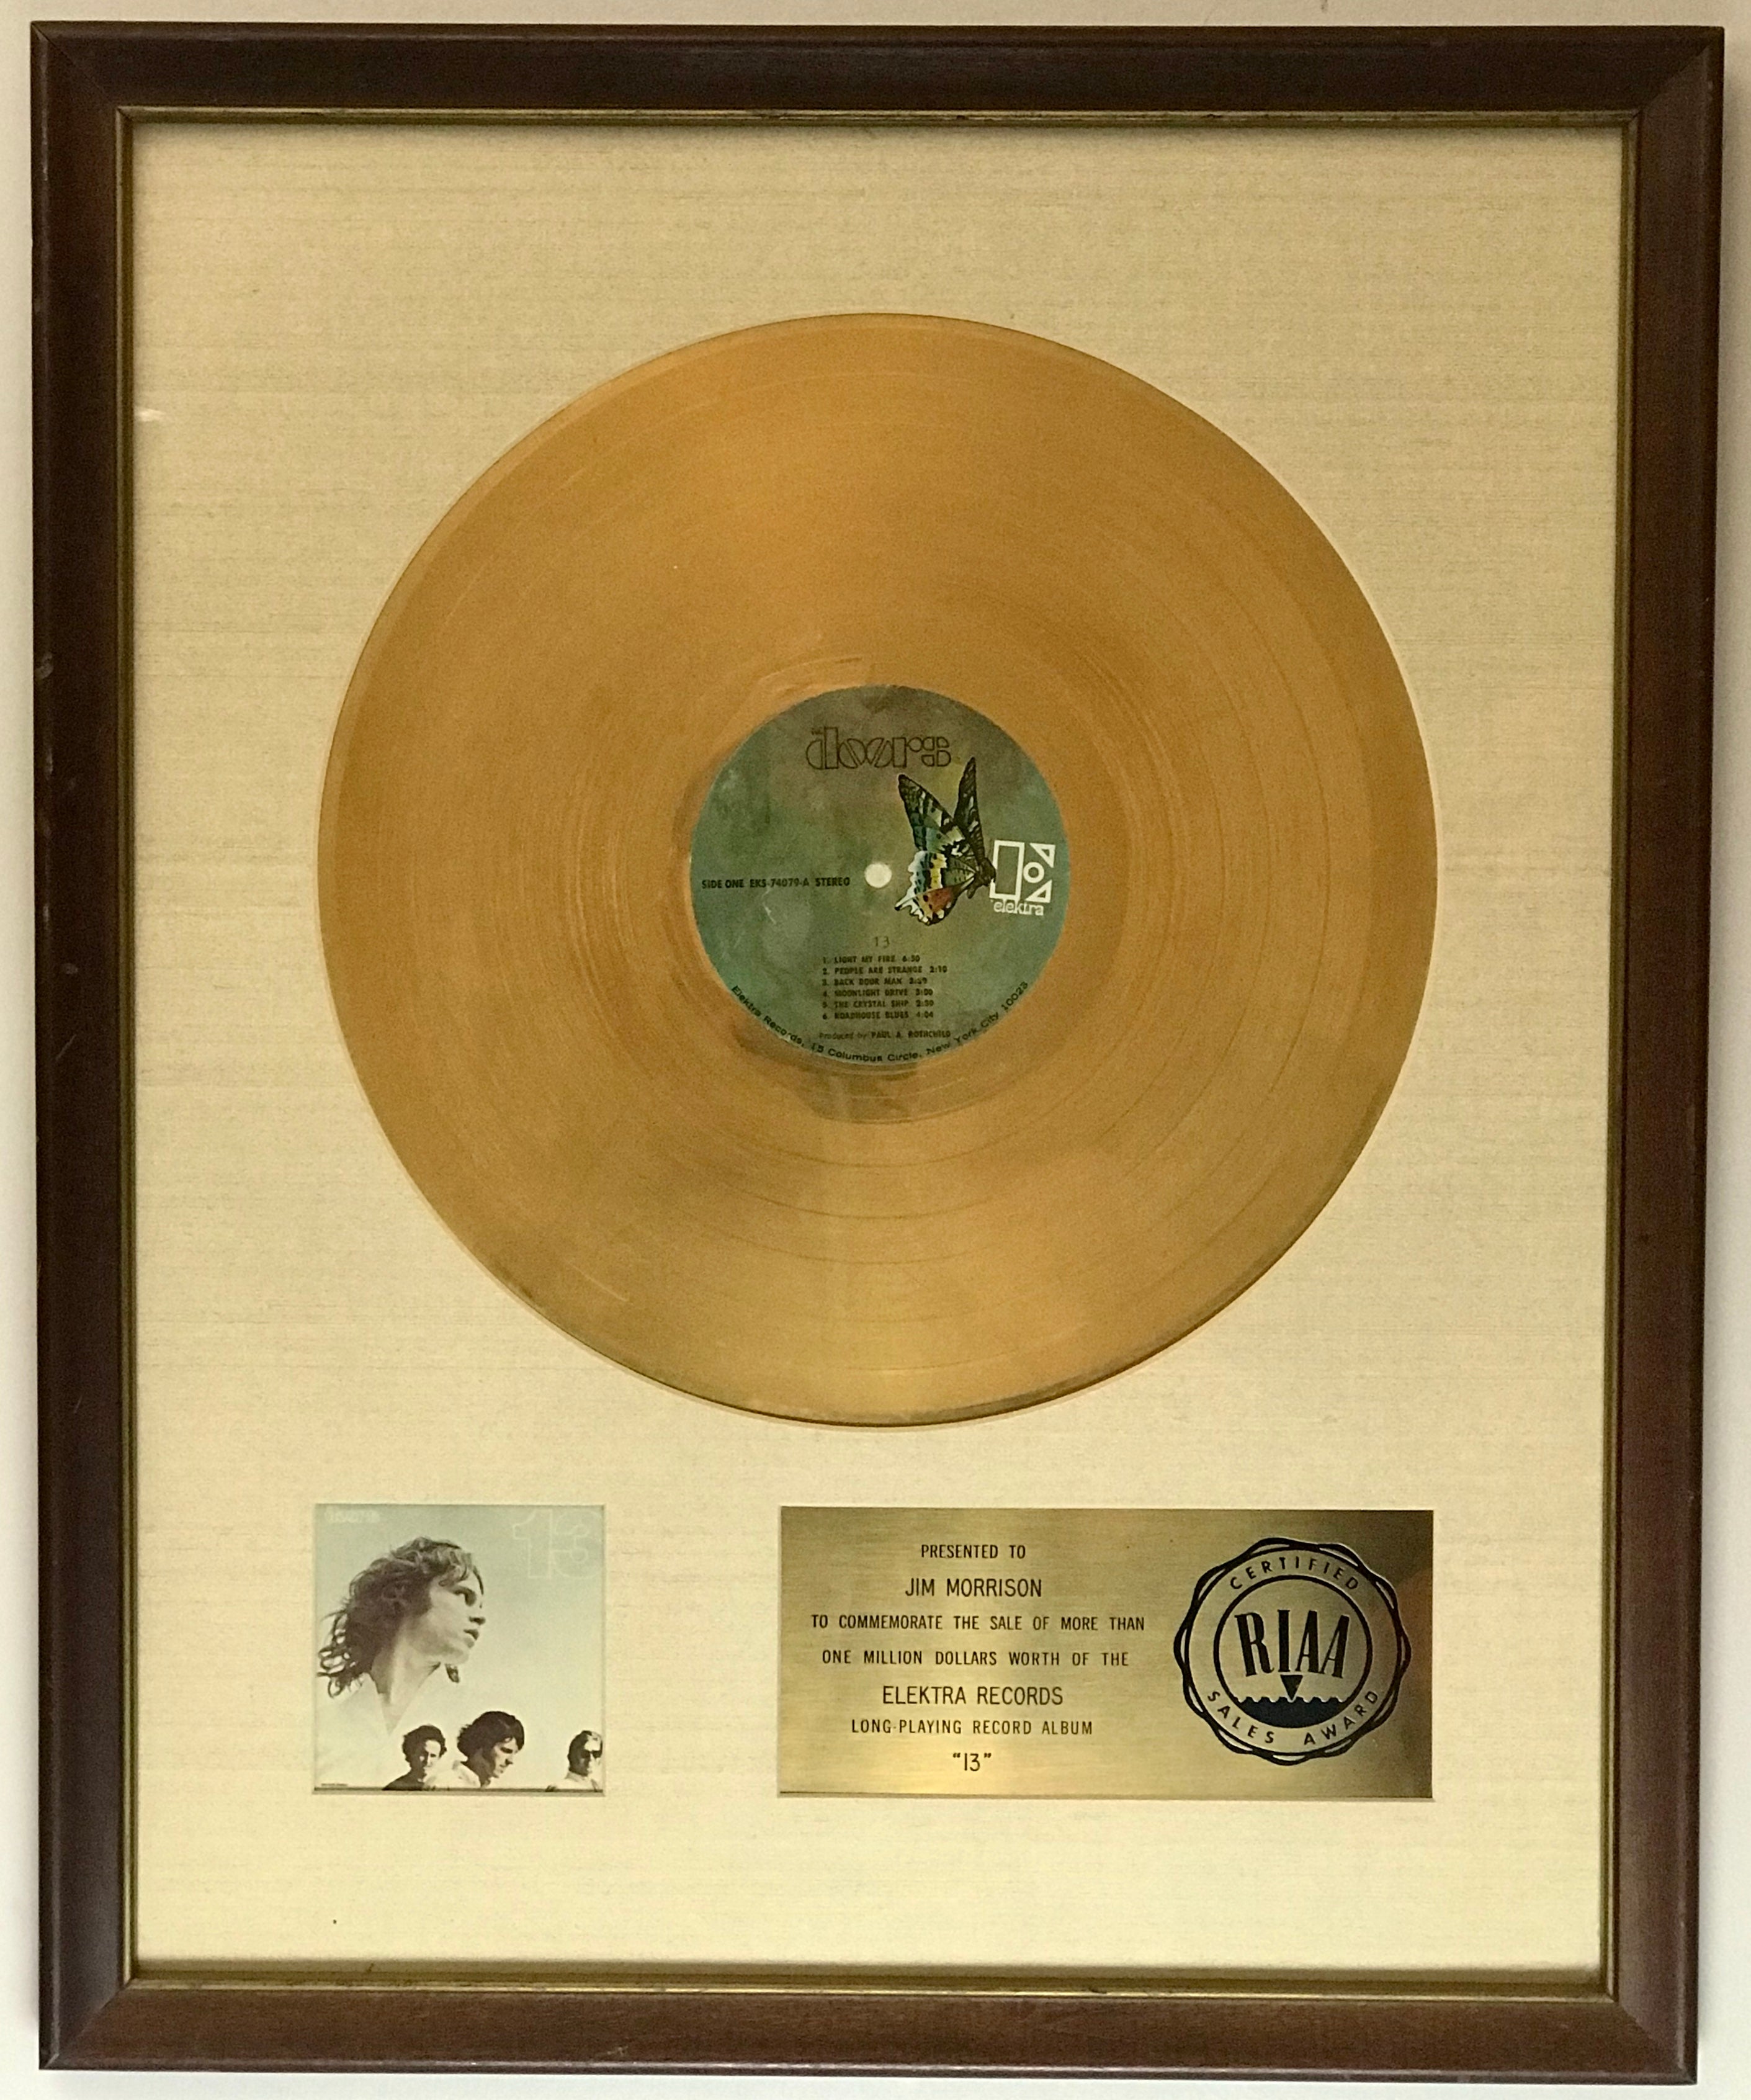 The Doors RIAA white matte award to Jim Morrison